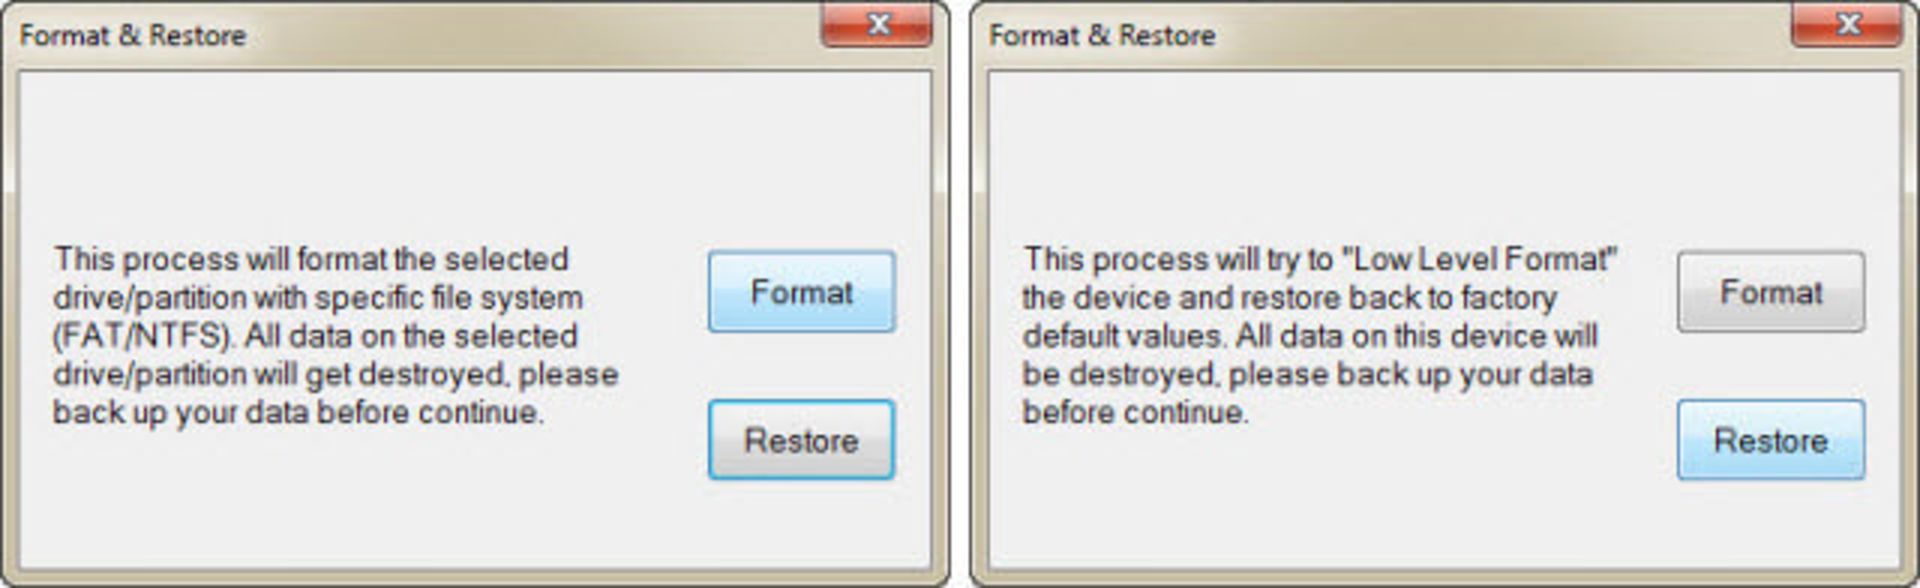 apacer-usb-format-restore